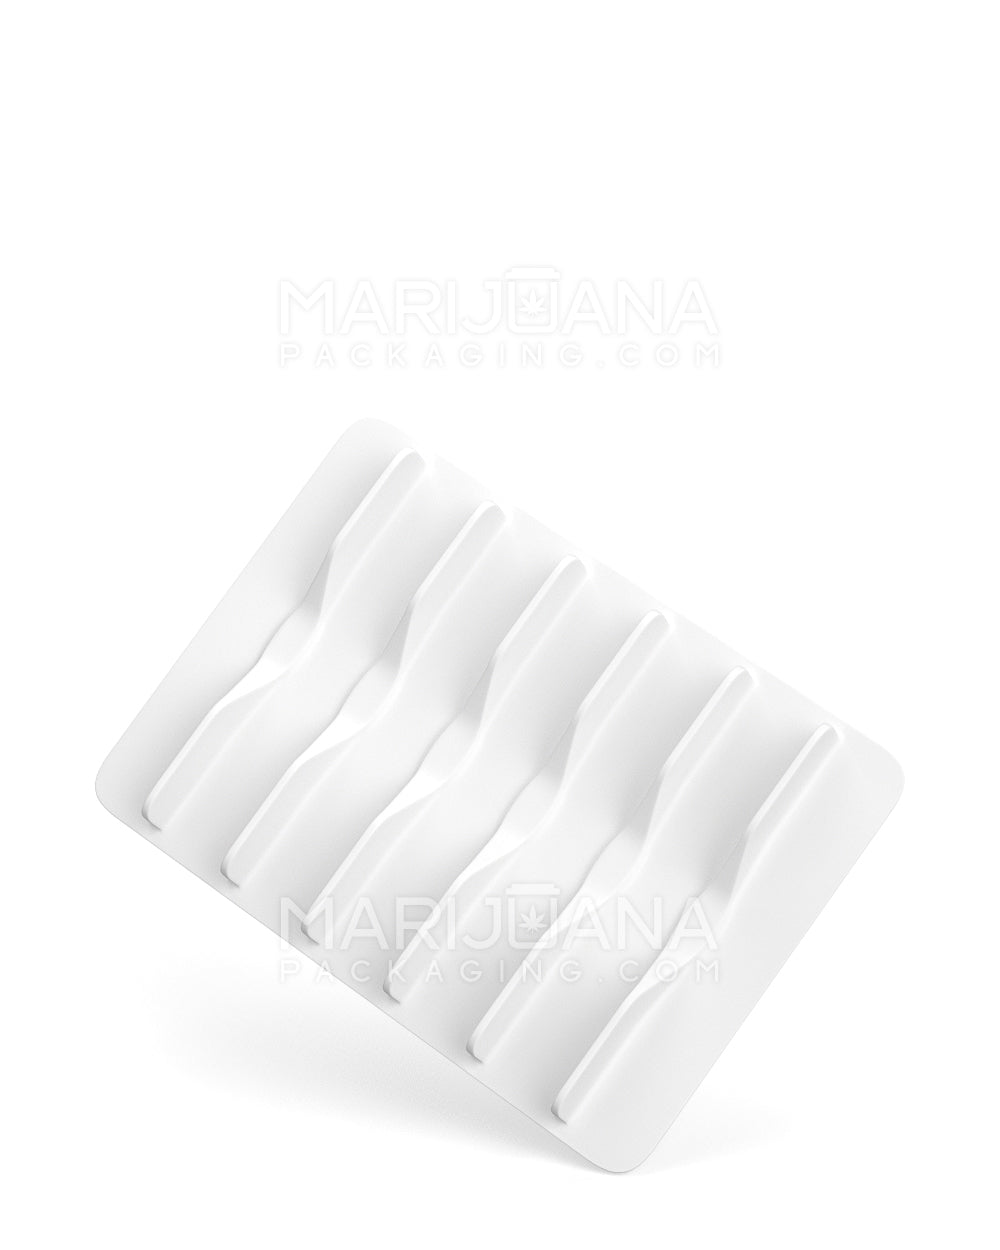 POLLEN GEAR | SnapTech Medium White Plastic Insert Tray | 25mm - Foam - 2000 Count - 5